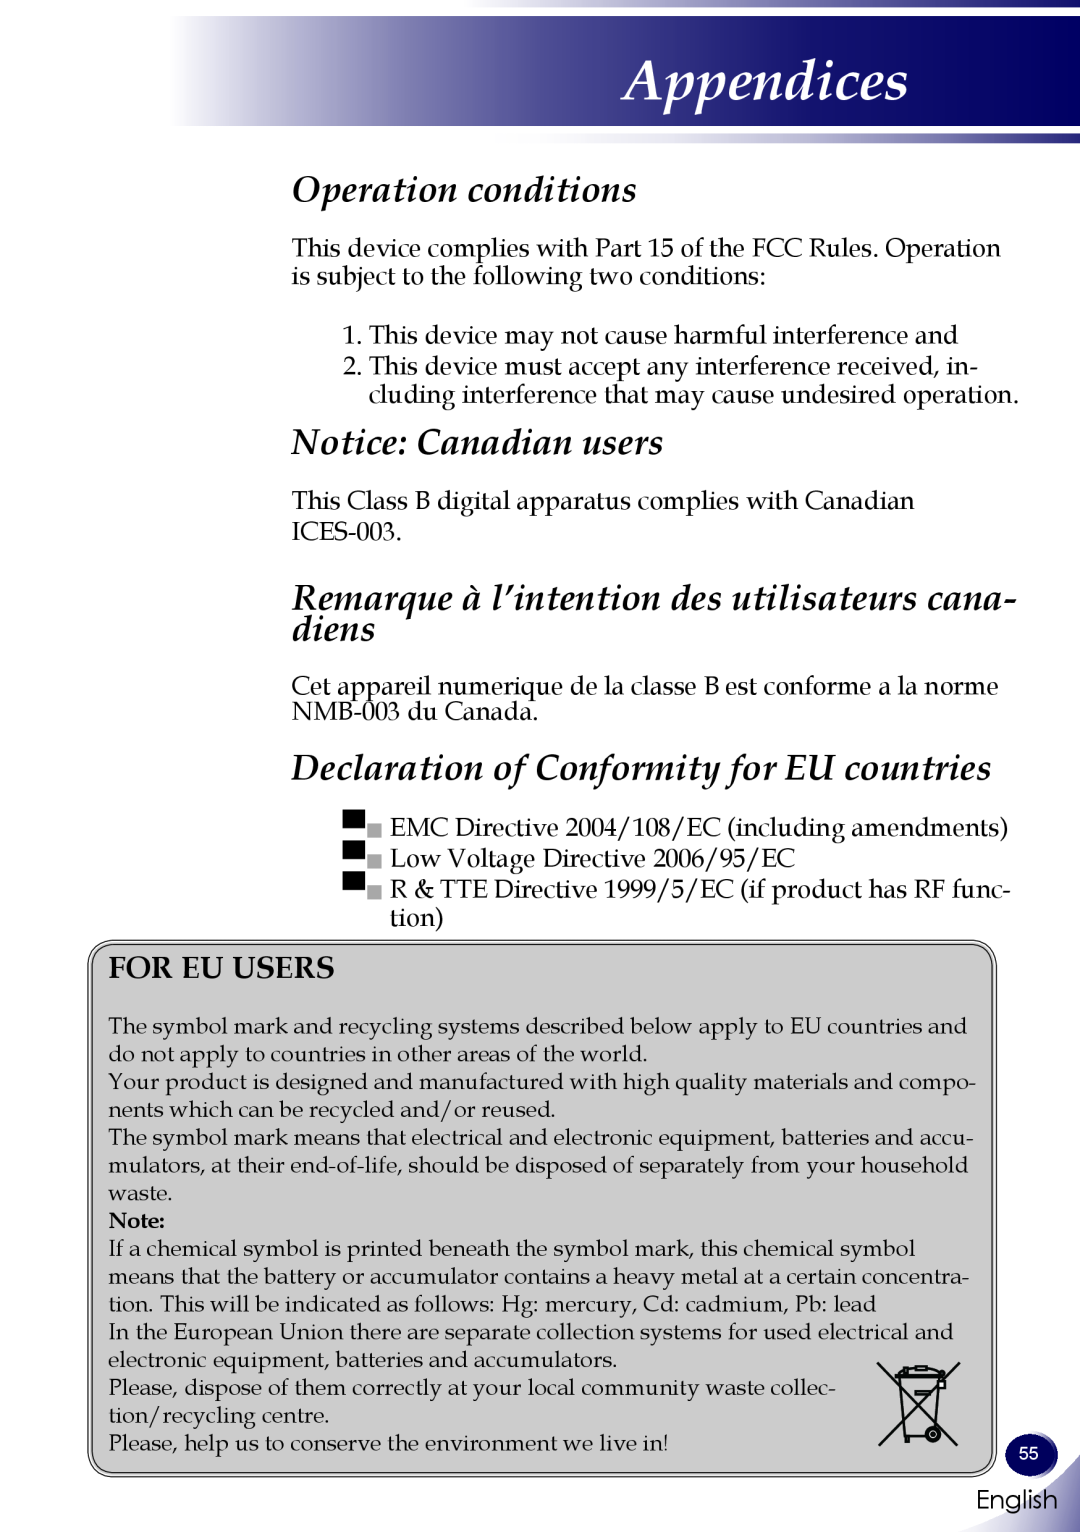 Sanyo PDG-DXL100 Operation conditions, Notice Canadian users, Remarque à l’intention des utilisateurs cana- diens, English 